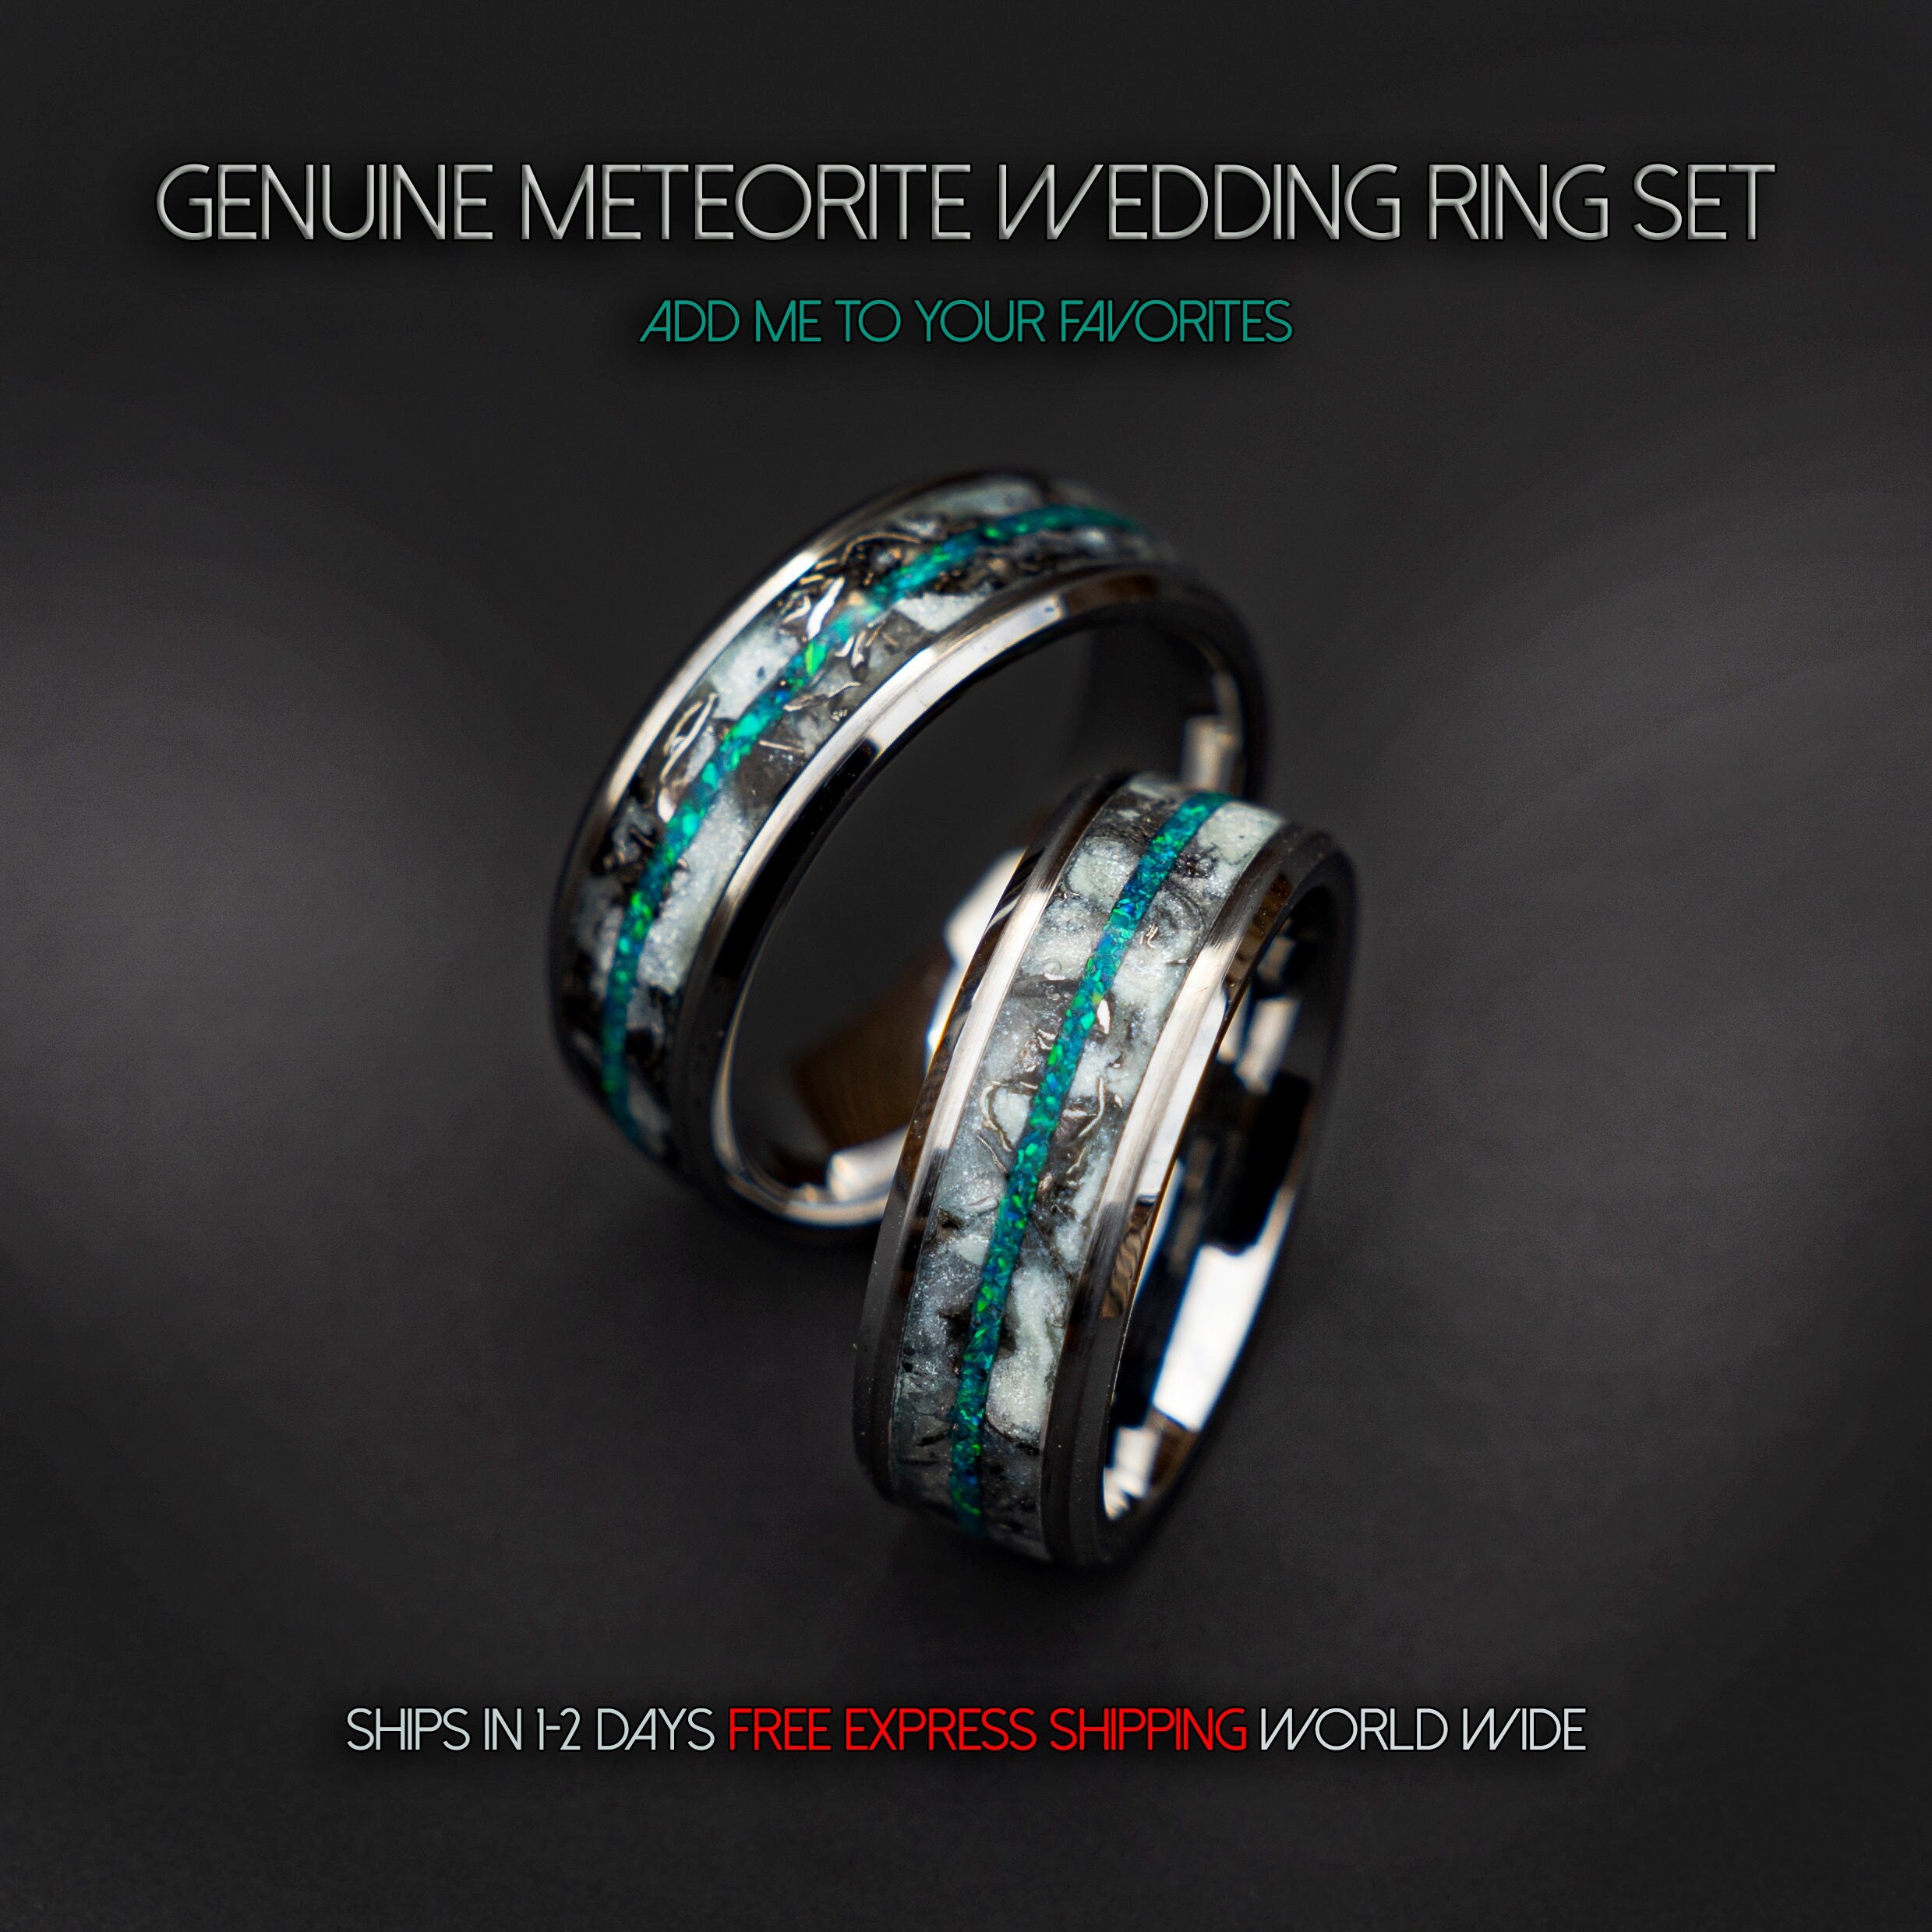 RSA-TM-TF wedding ring sets 925 custom| Alibaba.com